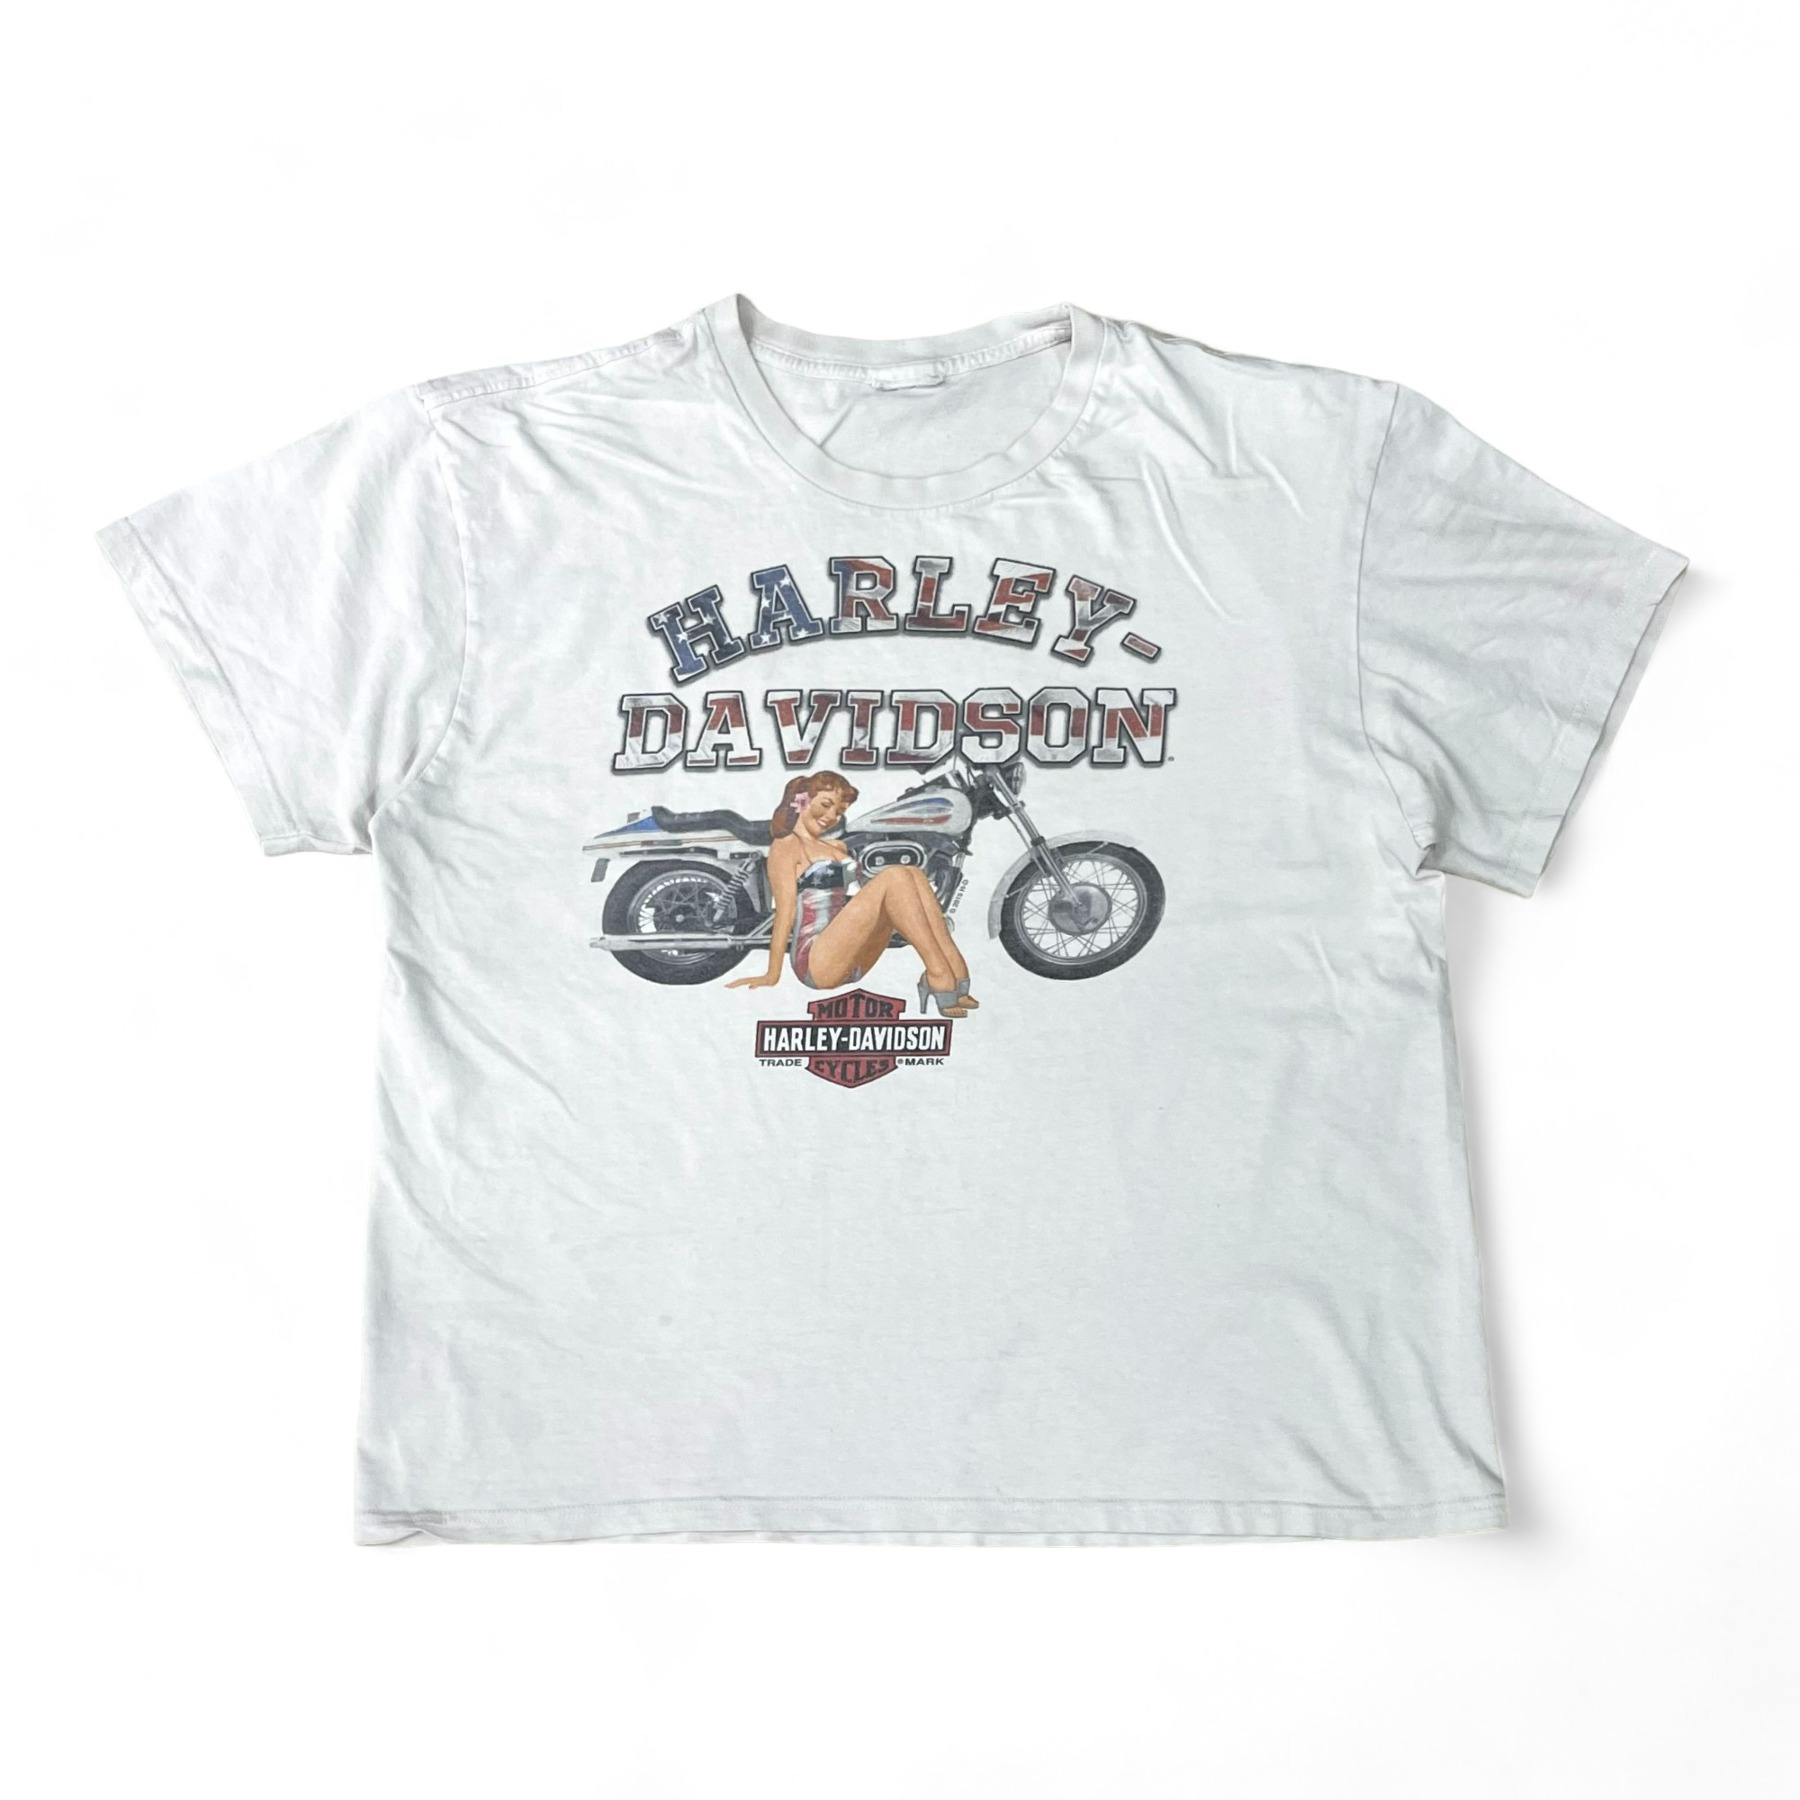 Harley Davidson Pin Up Girl Tee - XL